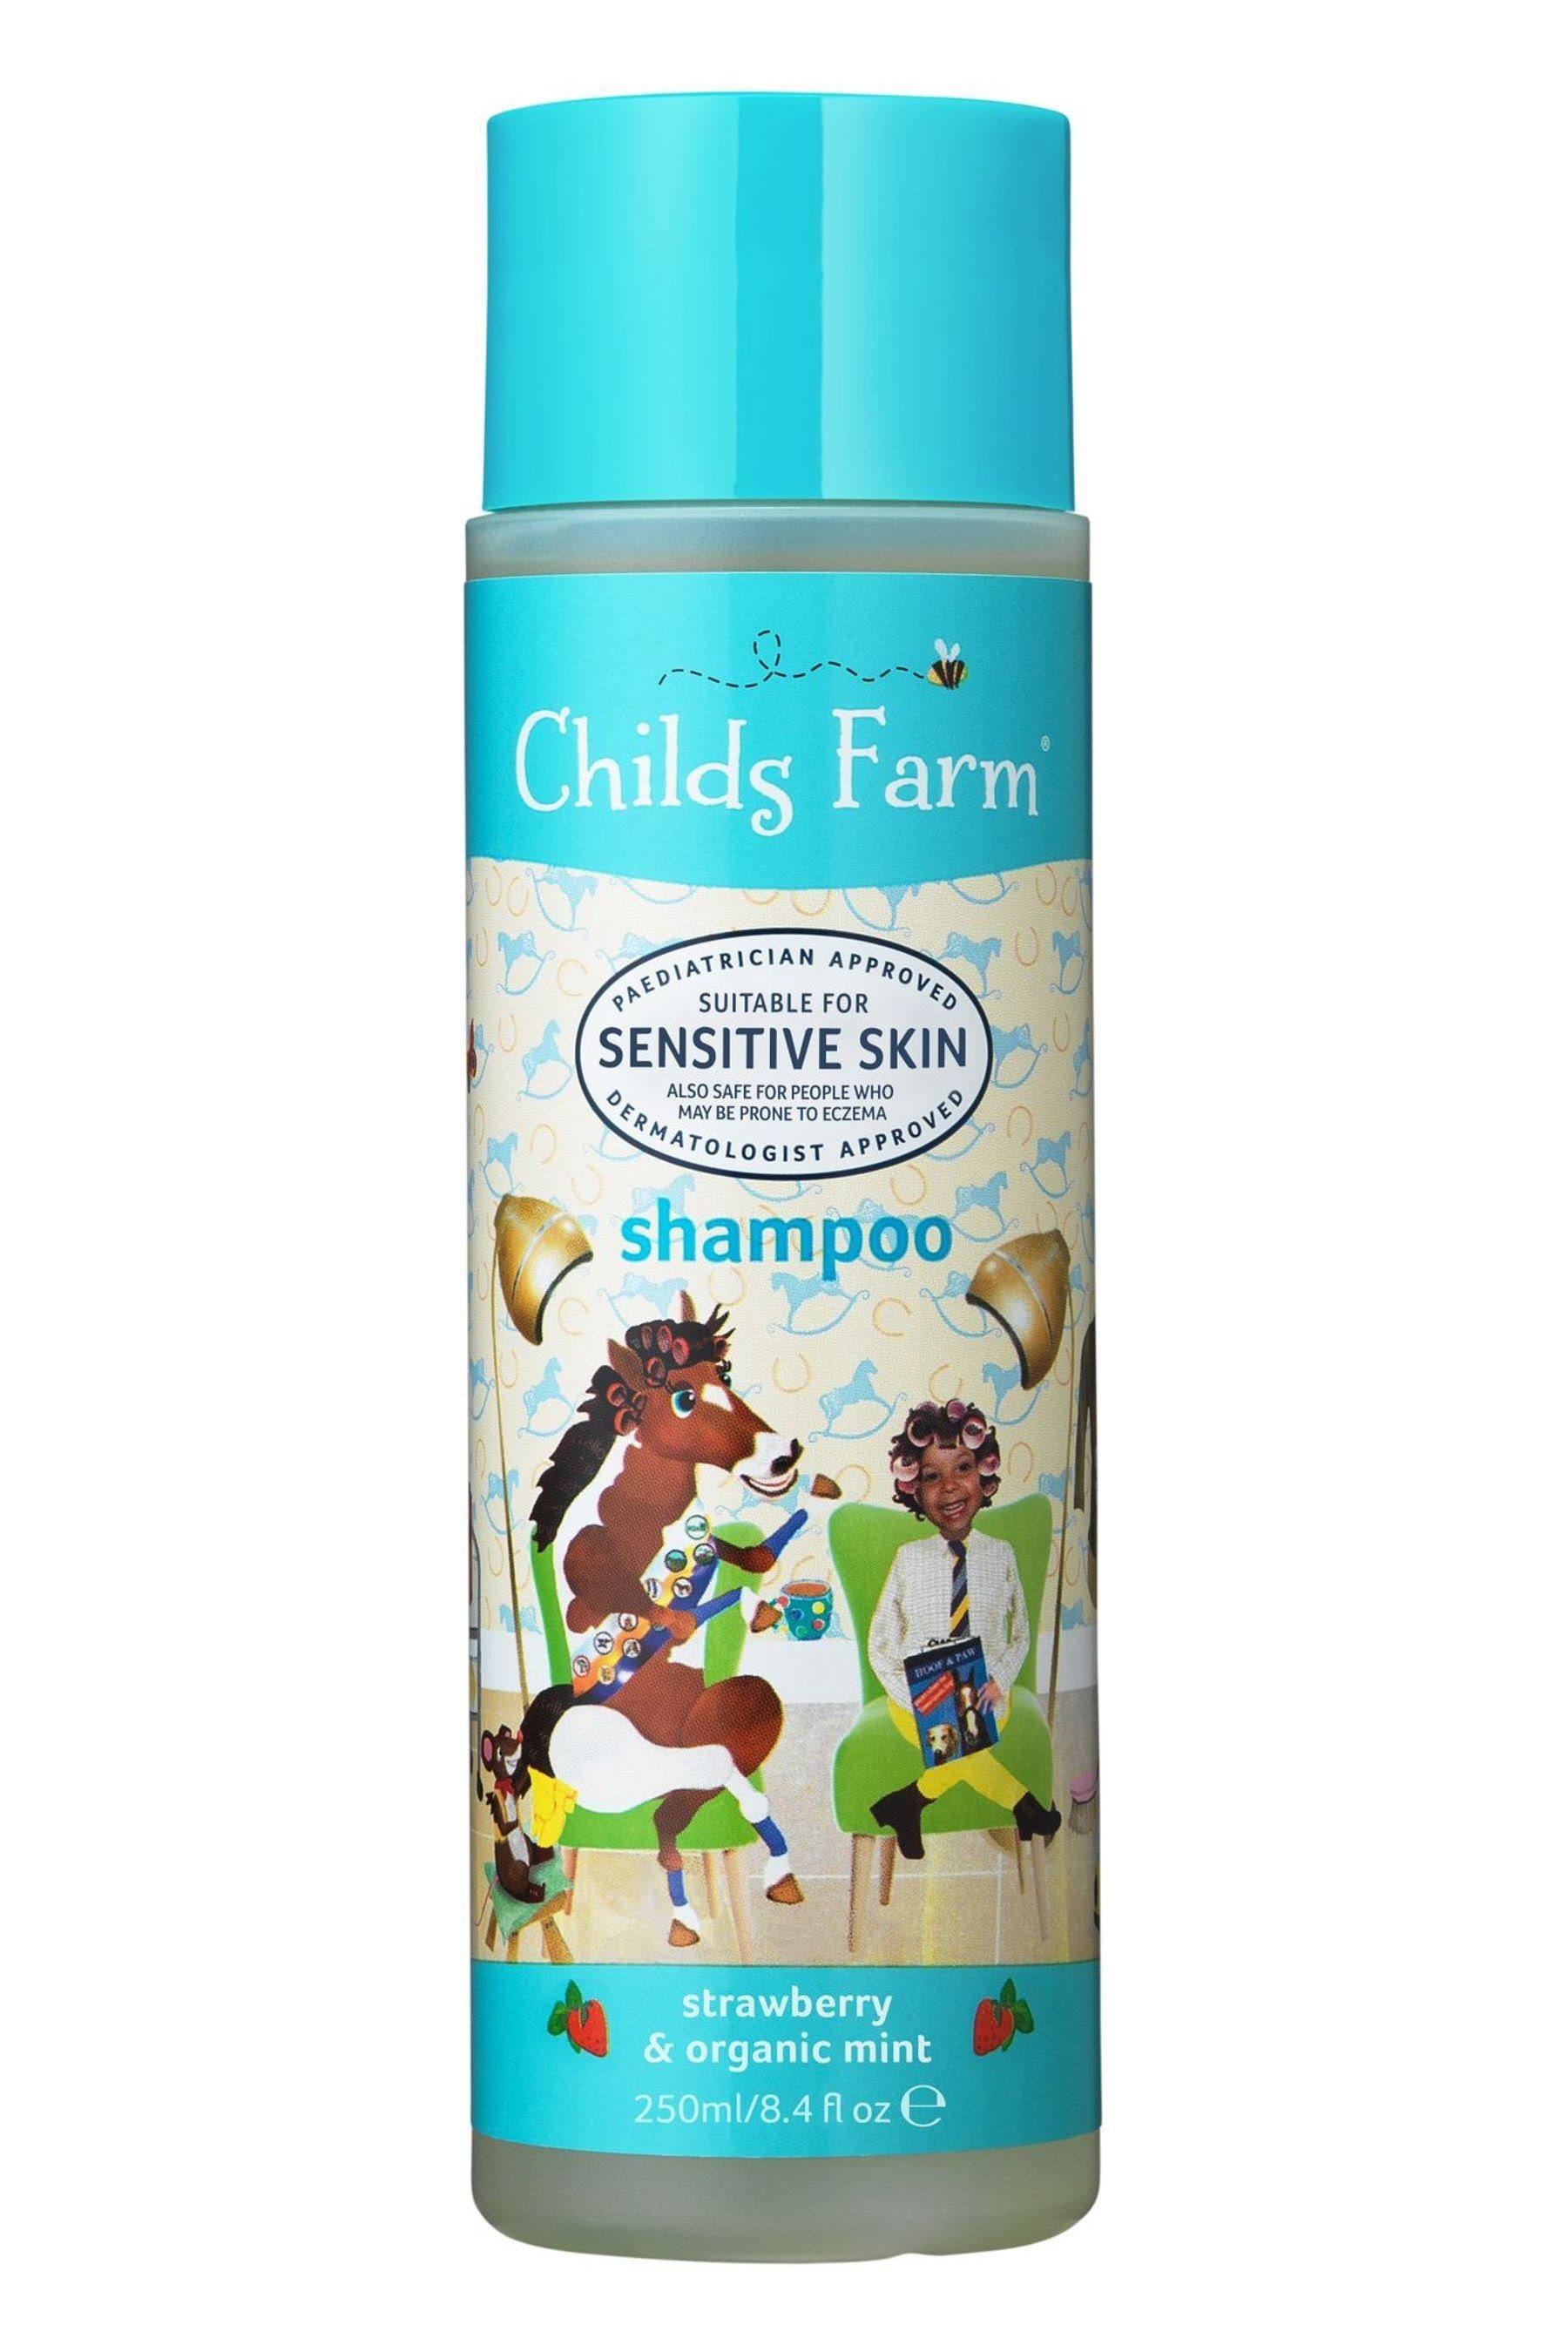 Childs Farm Shampoo - Strawberry & Organic Mint, 250ml